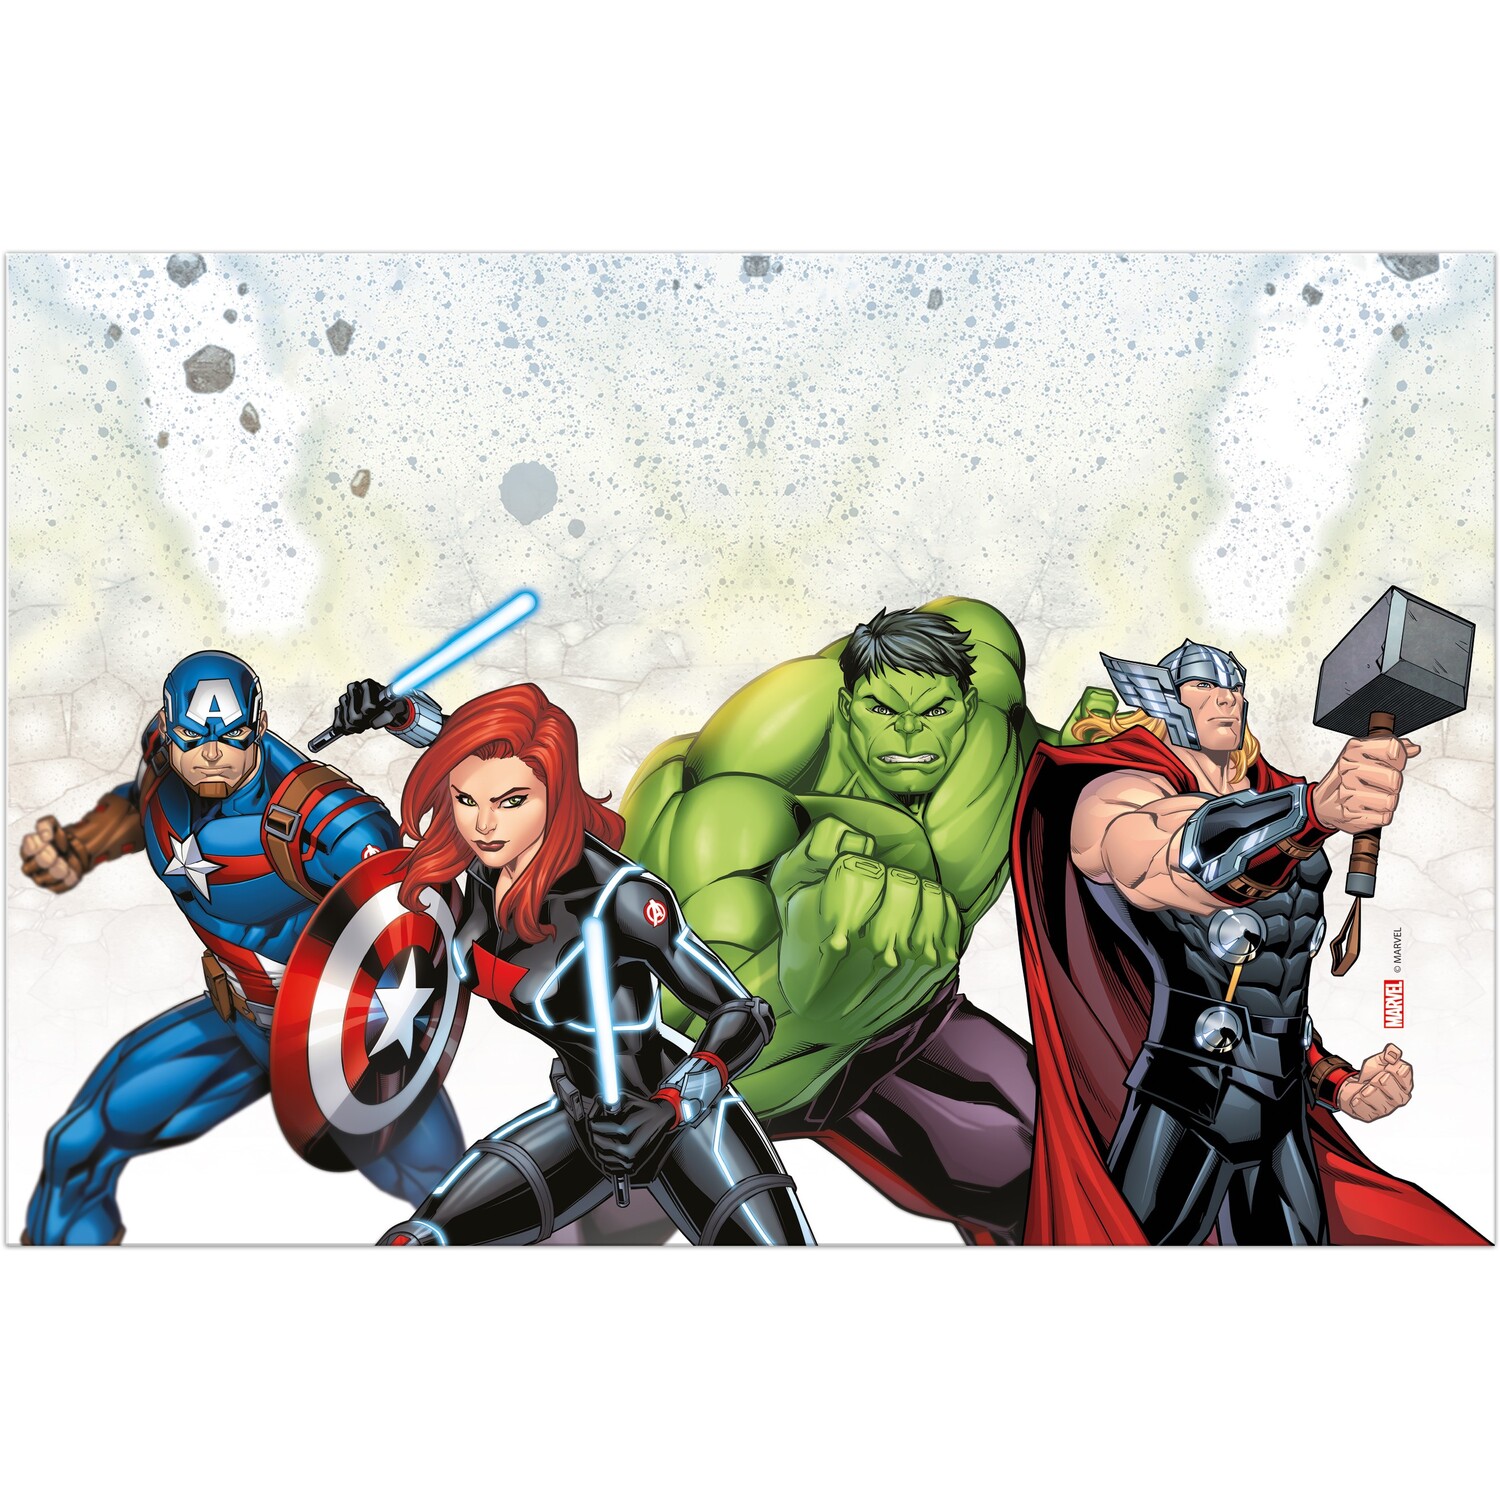 Avengers Plastic Table Cover - White Image